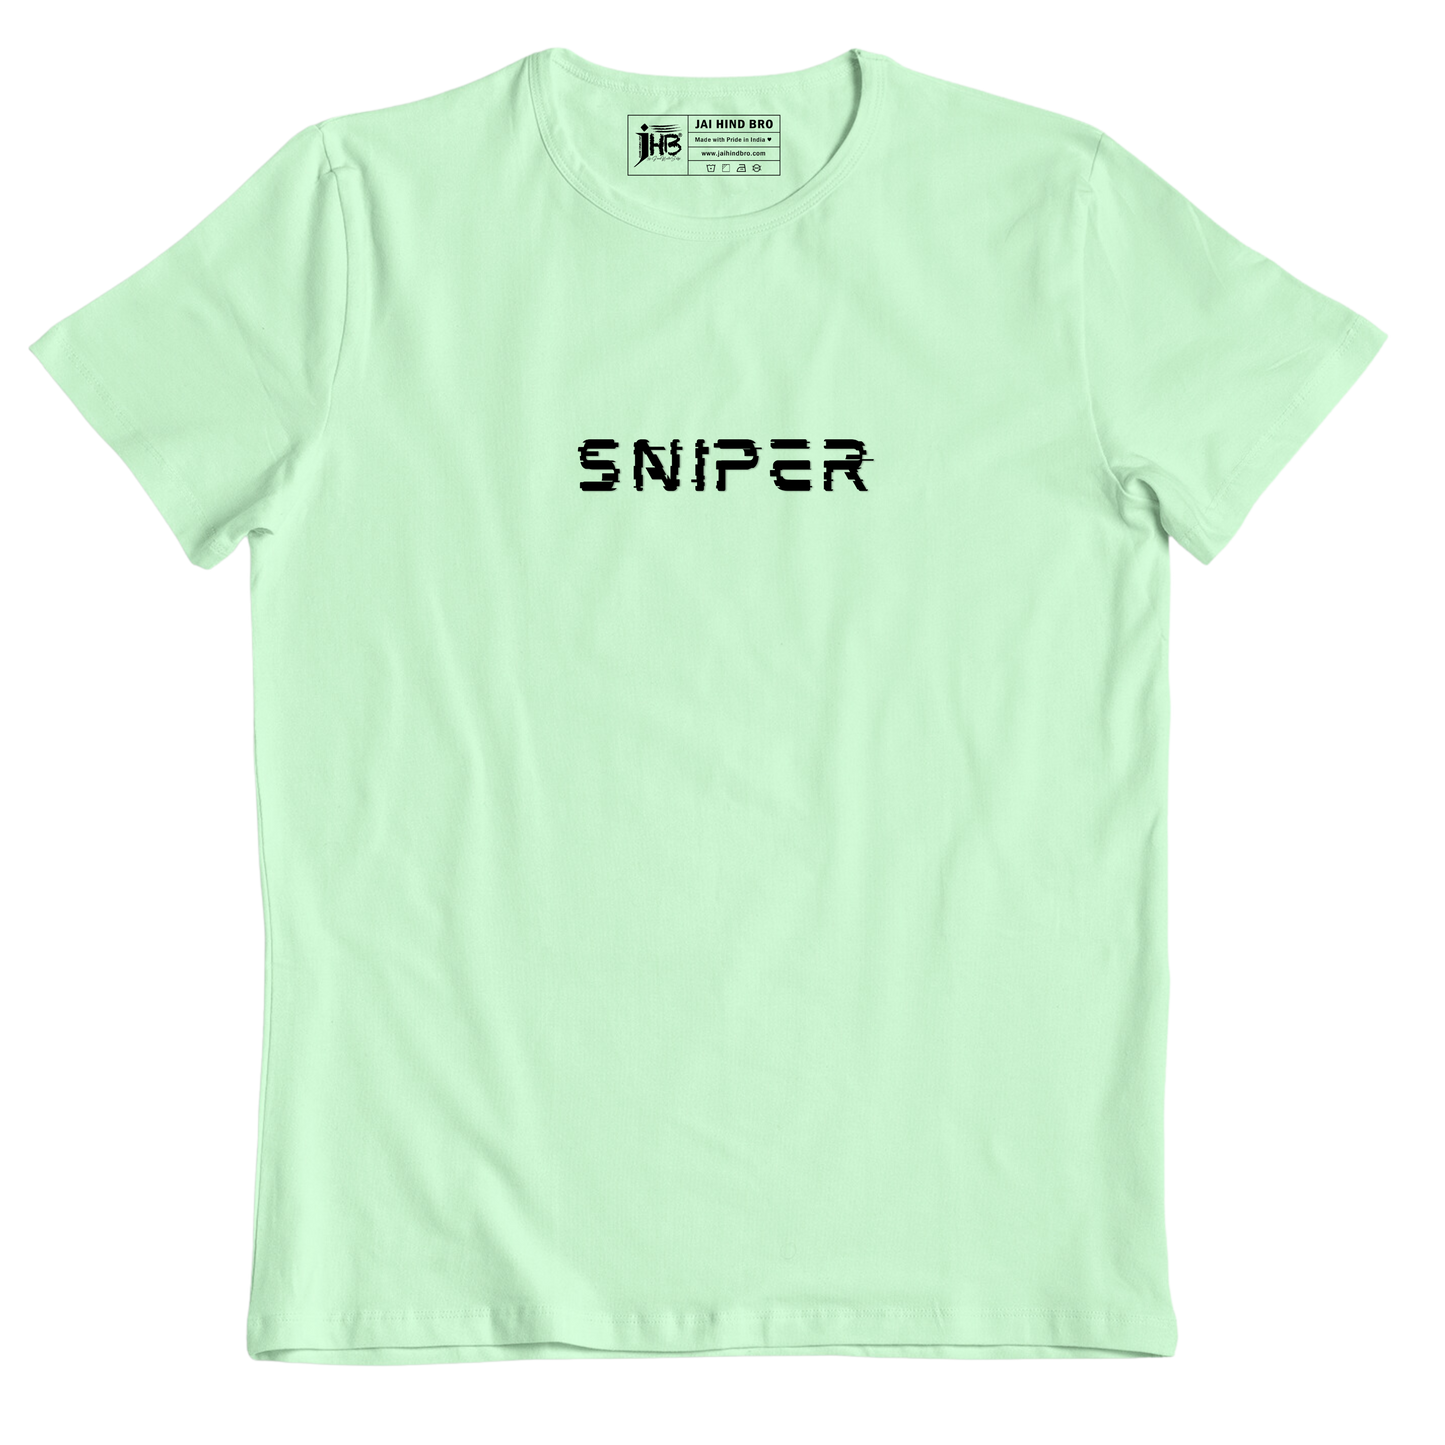 SNIPER OVERSIZED NEON GREEN T-SHIRT